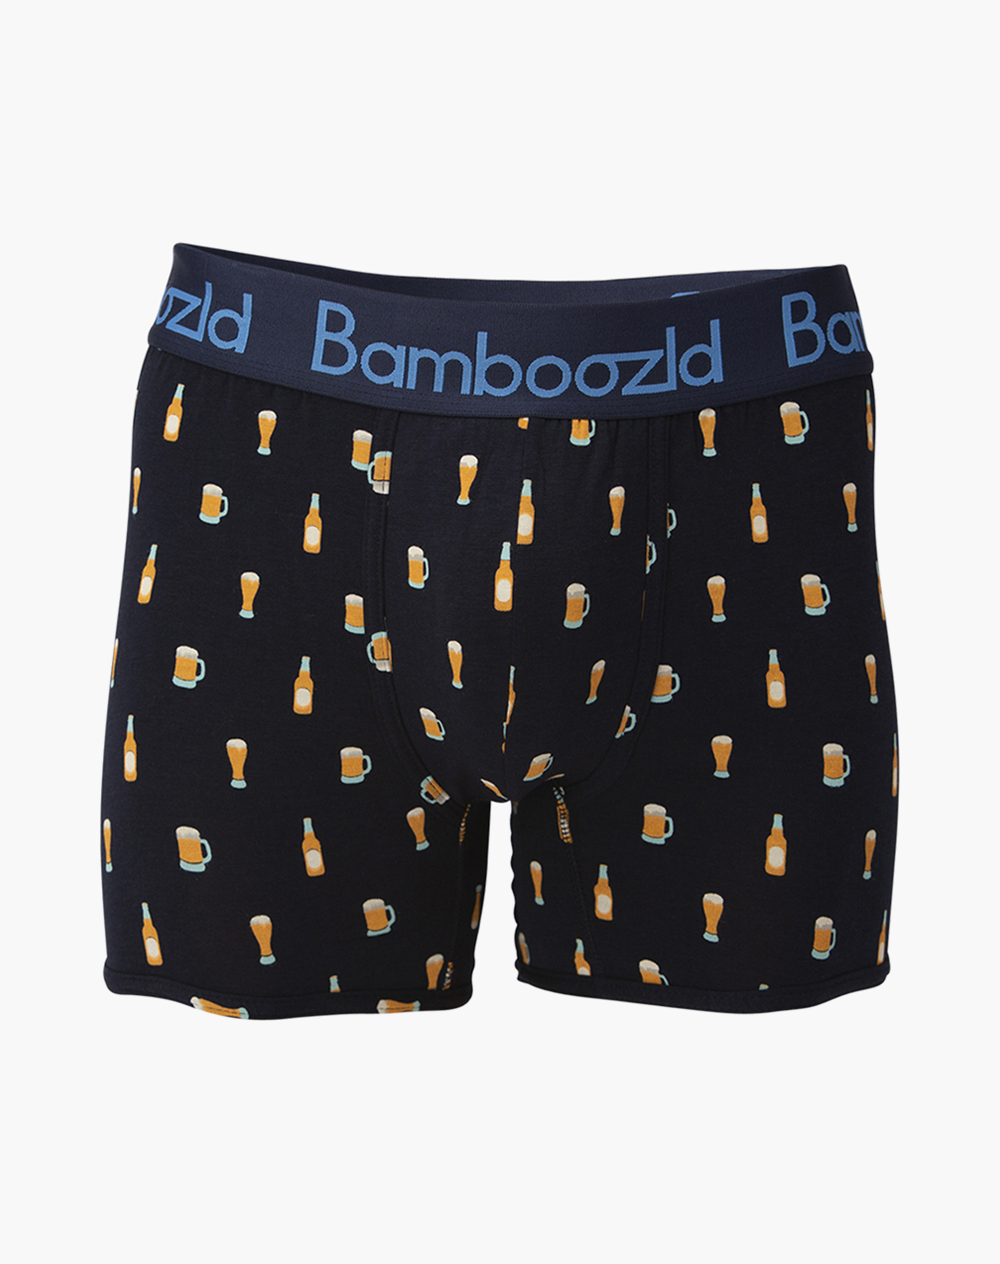 BAMBOO COTTON BEER TRUNK – Bamboozld